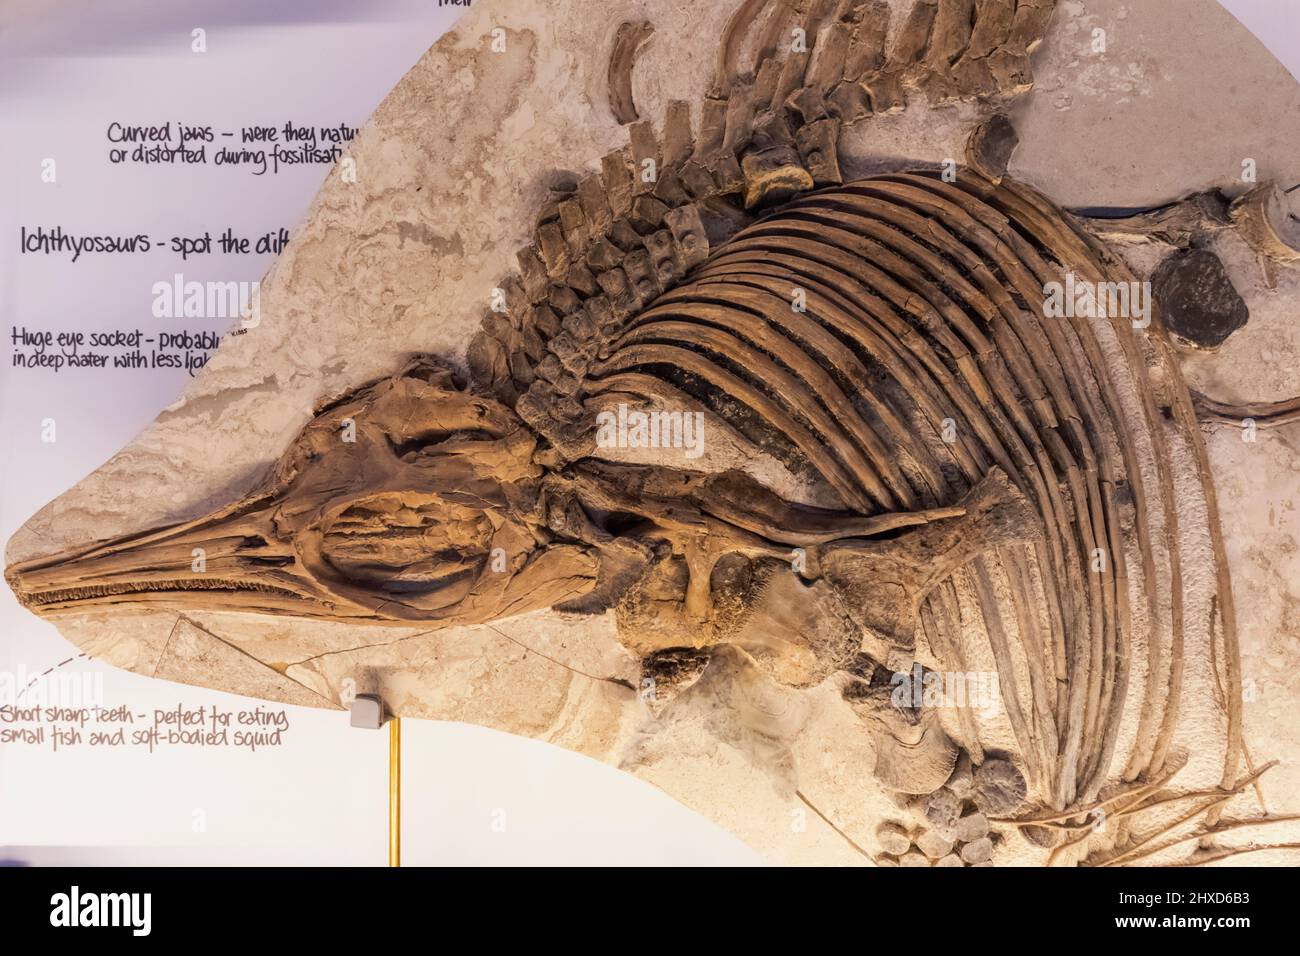 Angleterre, Dorset, Kimmeridge, The Etches Collection Museum of Jurassic Marine Life, exposition d'un squelette fossilisé d'ichtyosaure Banque D'Images